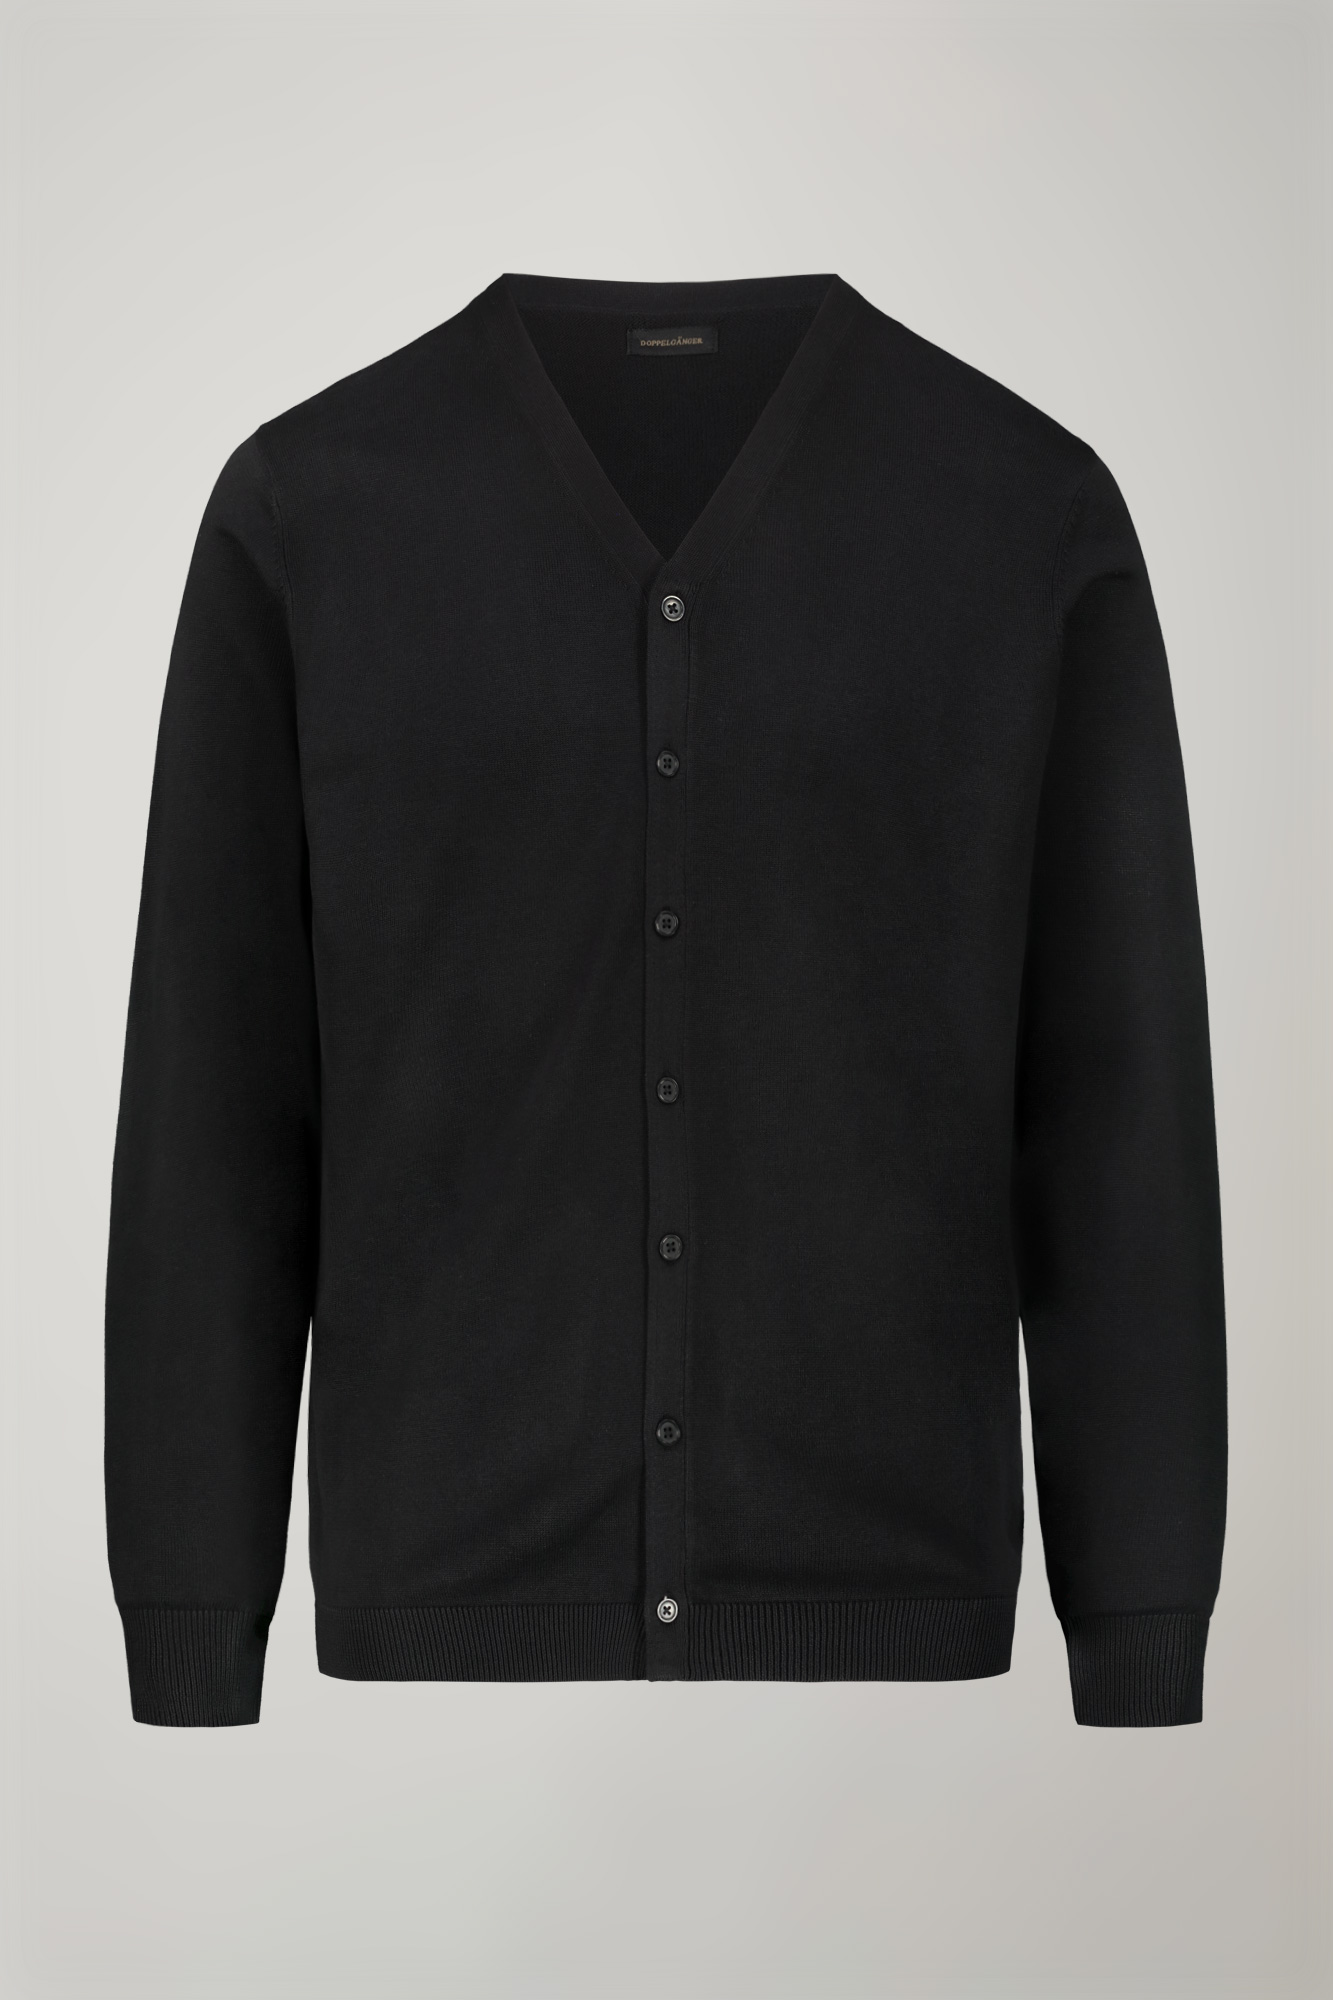 Men's sweater V collar 100% cotton regular fit image number null